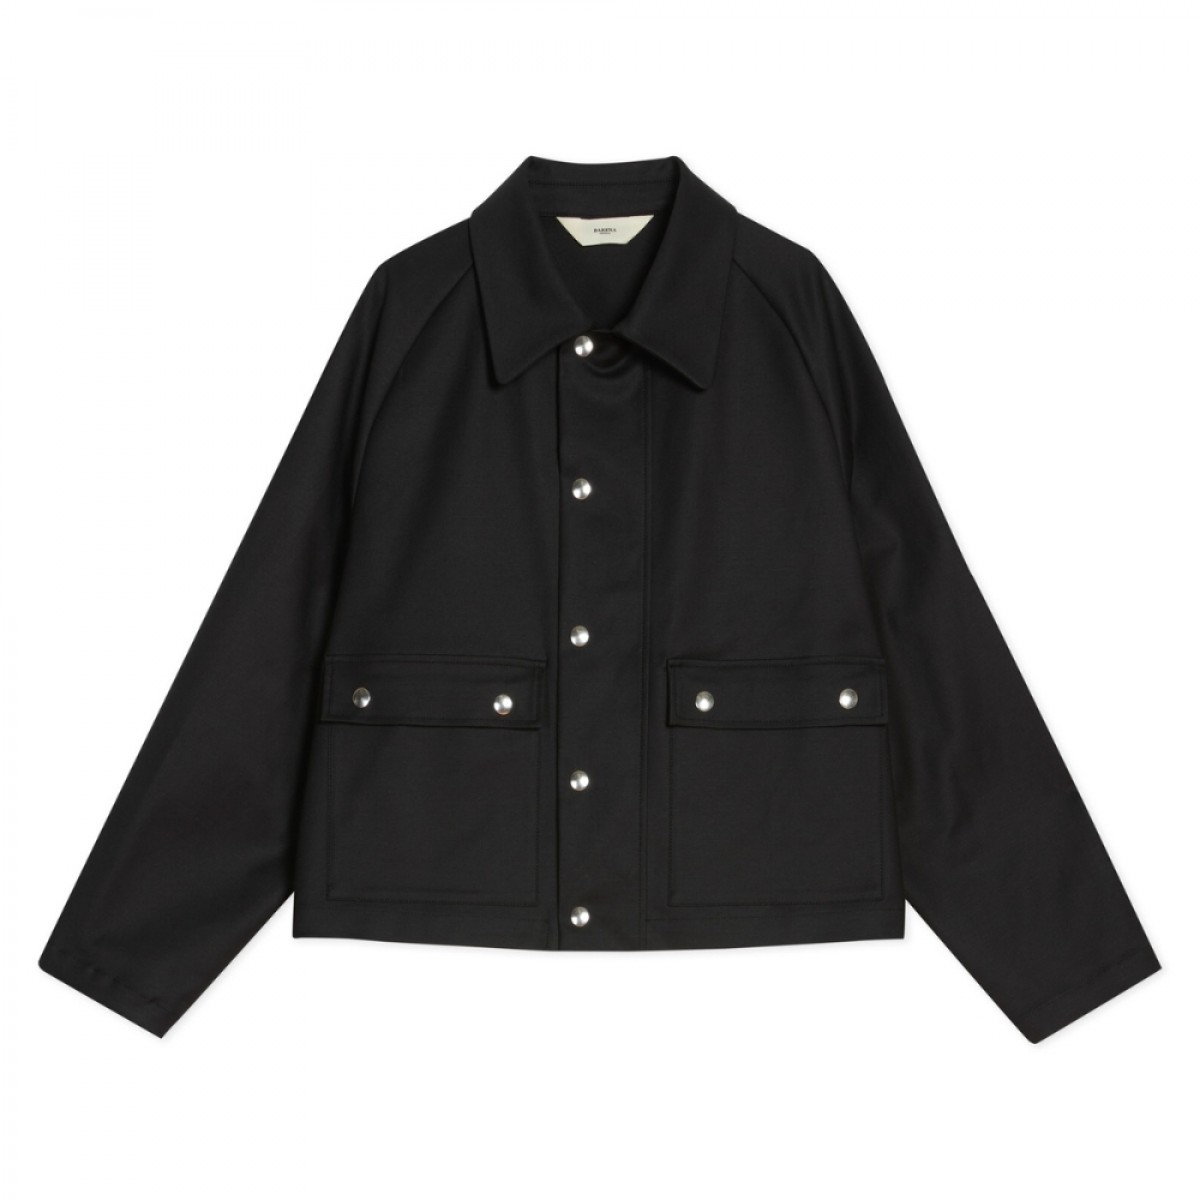 aria minimal jacket - black - front